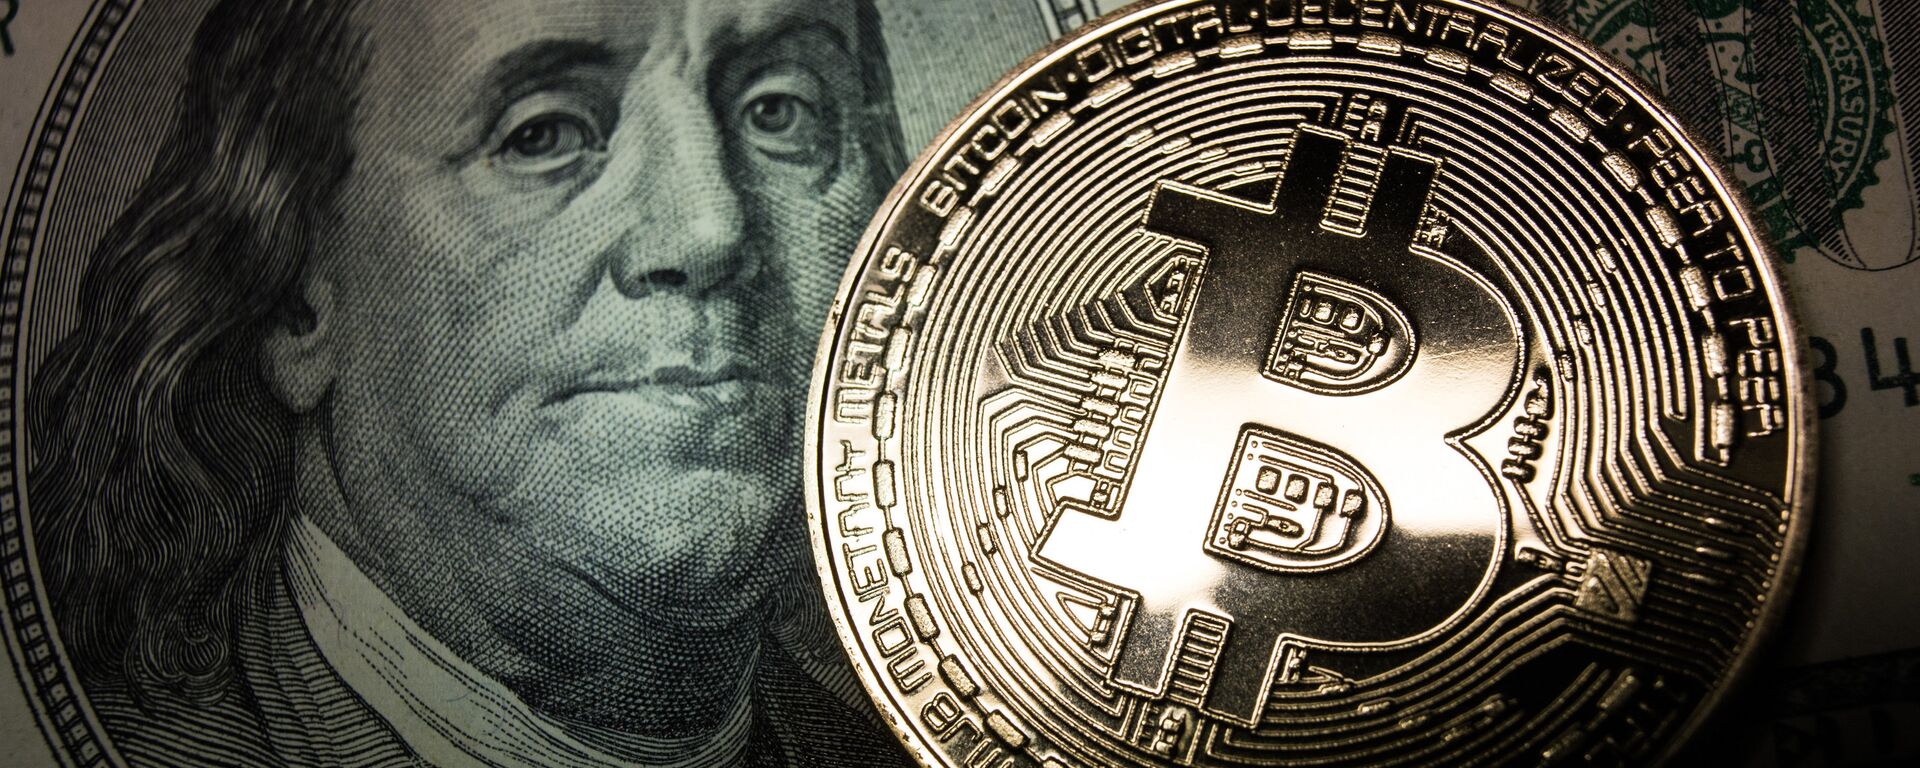 Bitcoin y un billete de dólar - Sputnik Mundo, 1920, 26.02.2021